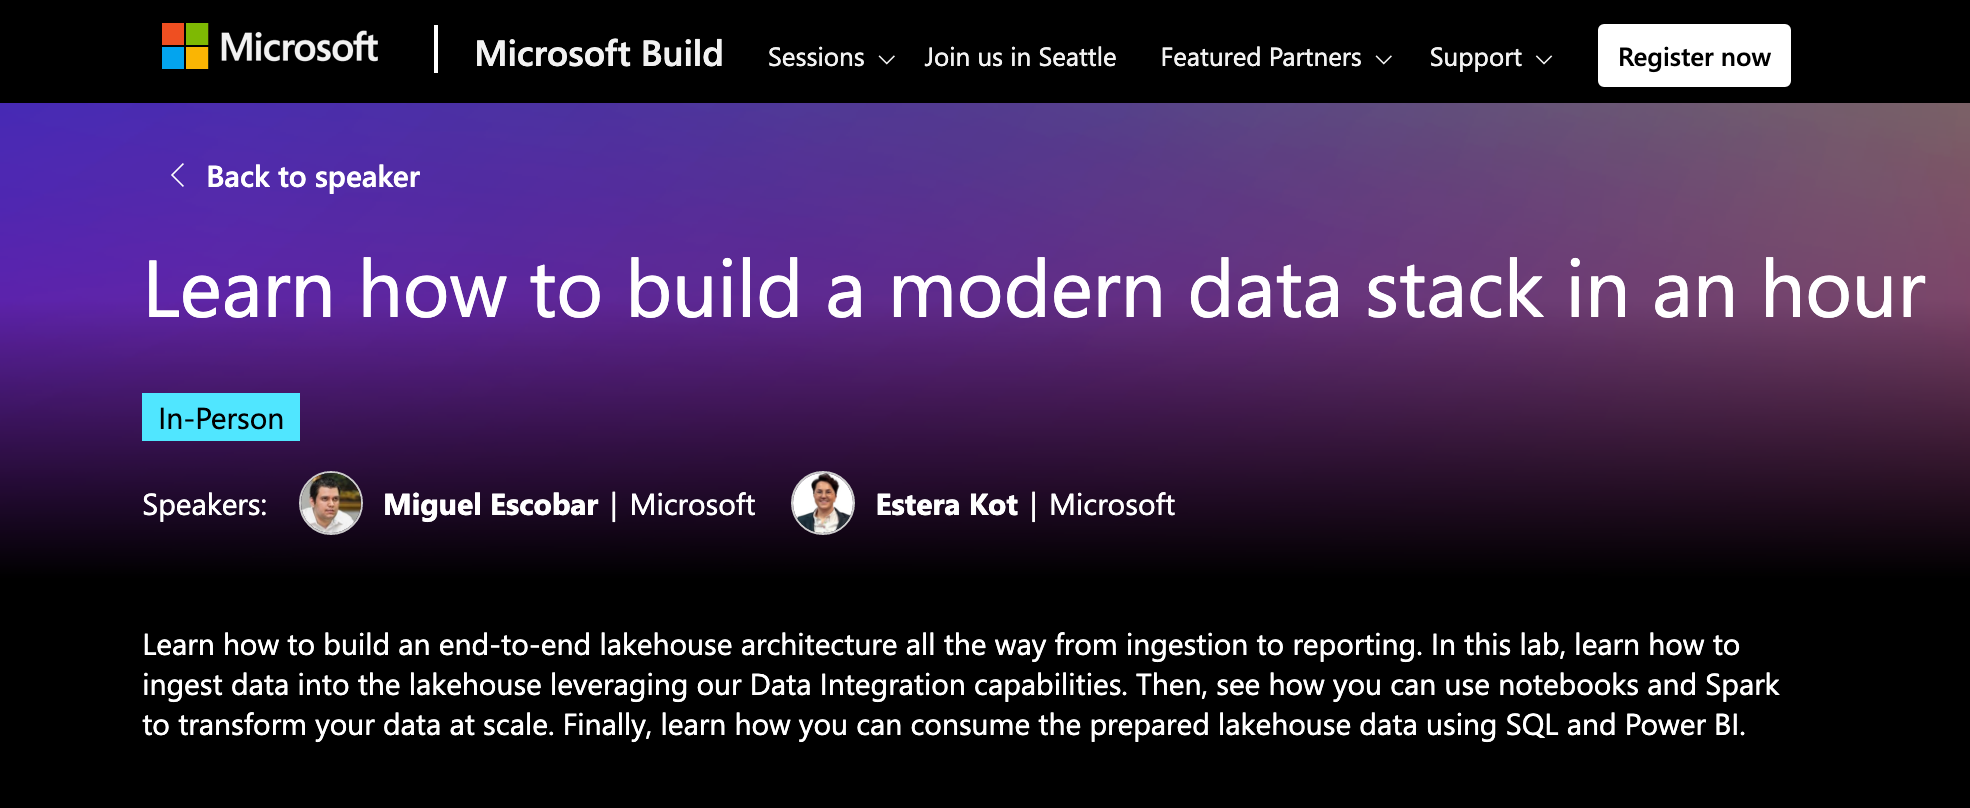 I’m speaking at Microsoft Build